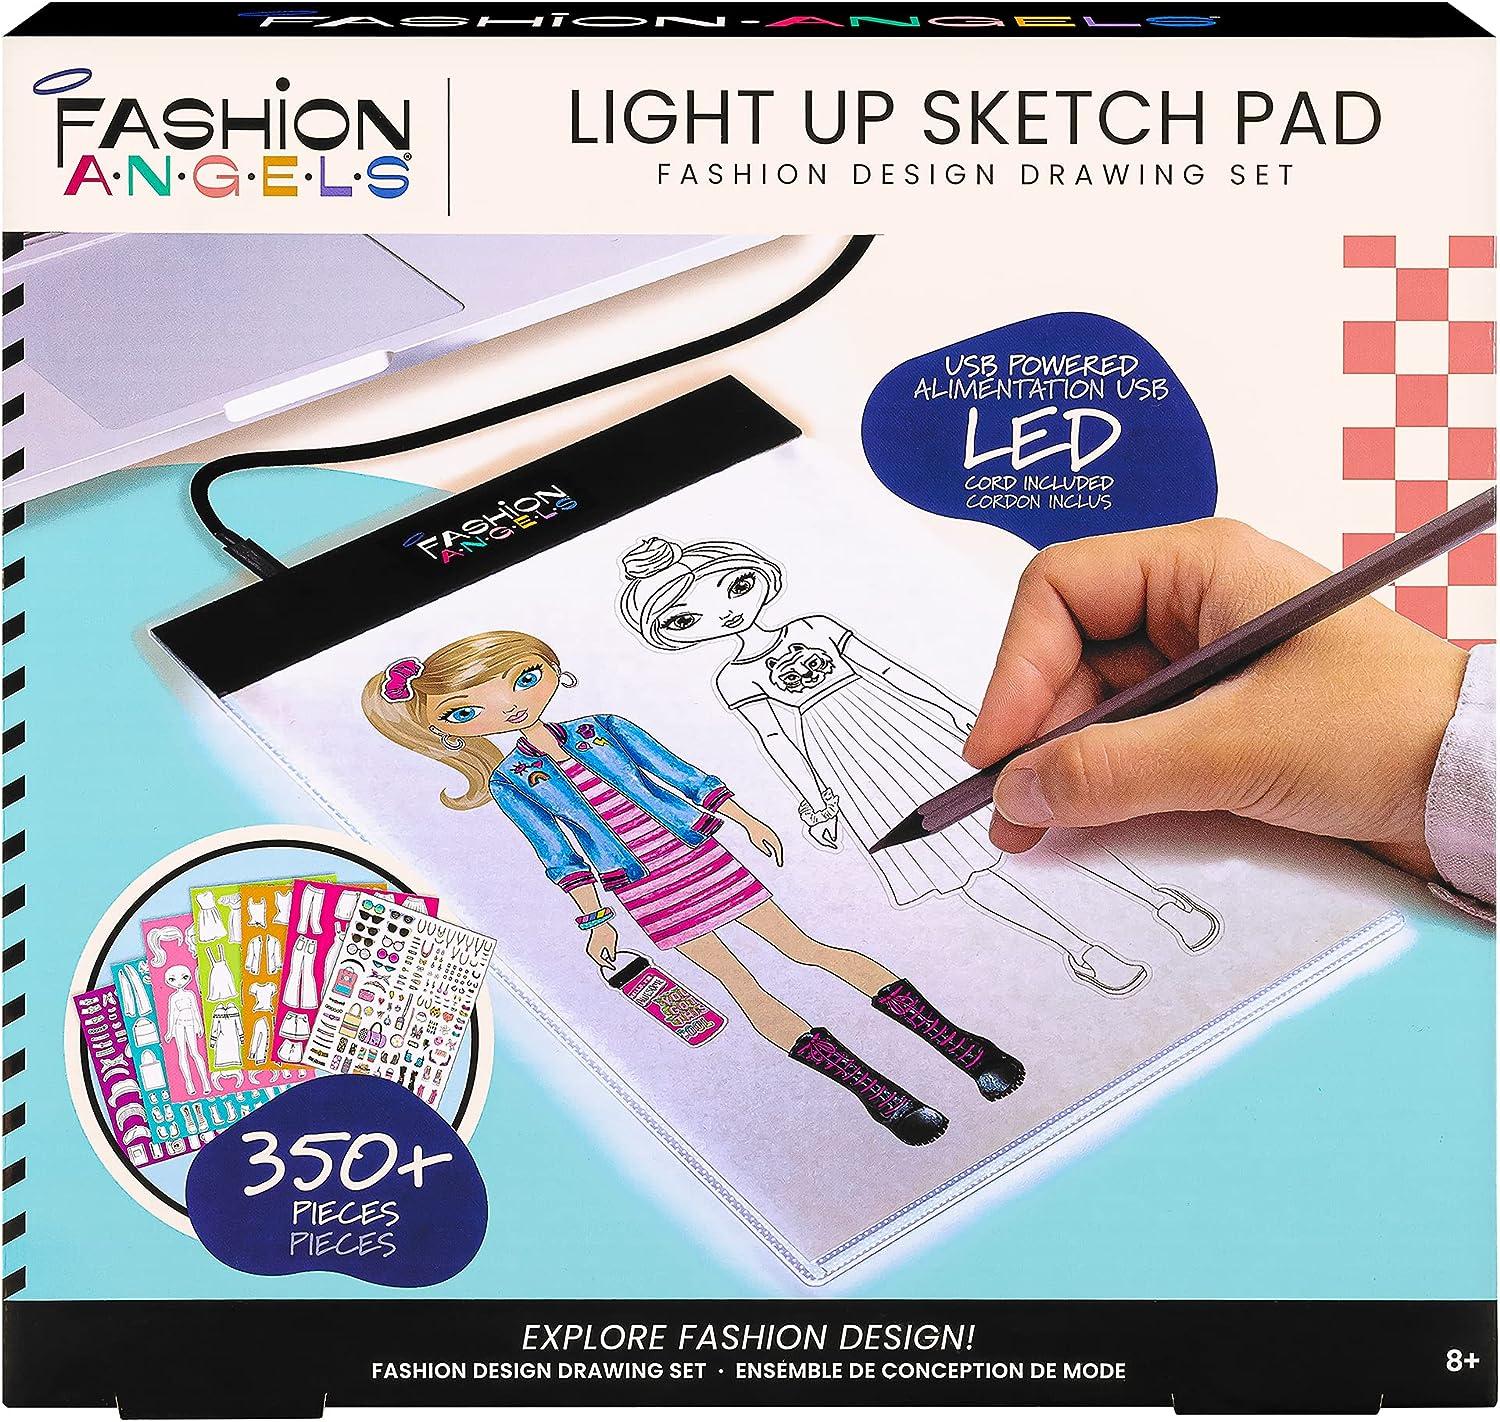 Fashion Angels Fashion Design Light Up Sketch Pad 12521 Light Up